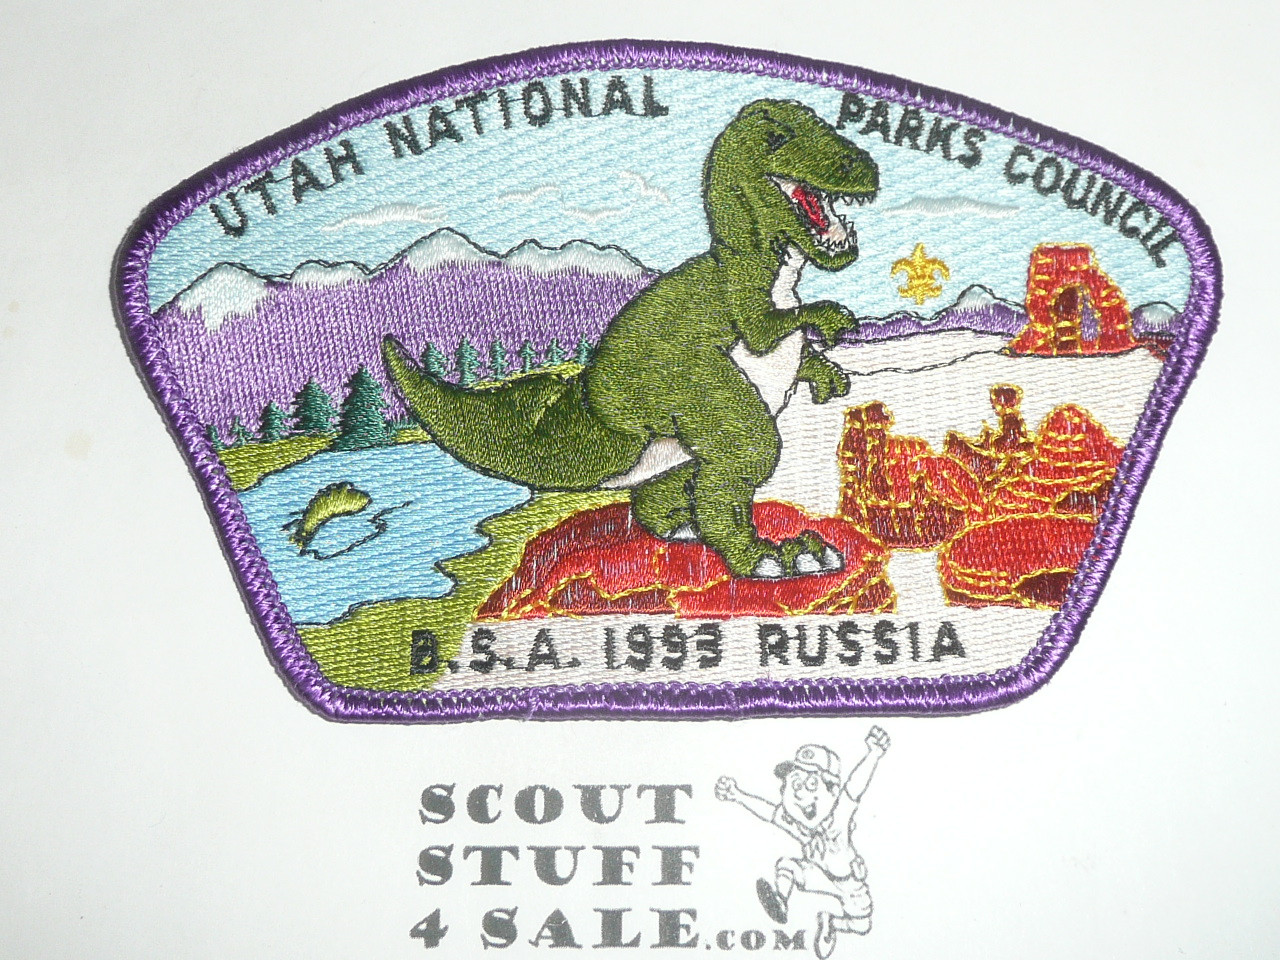 Utah National Parks Council sa14 CSP - Scout